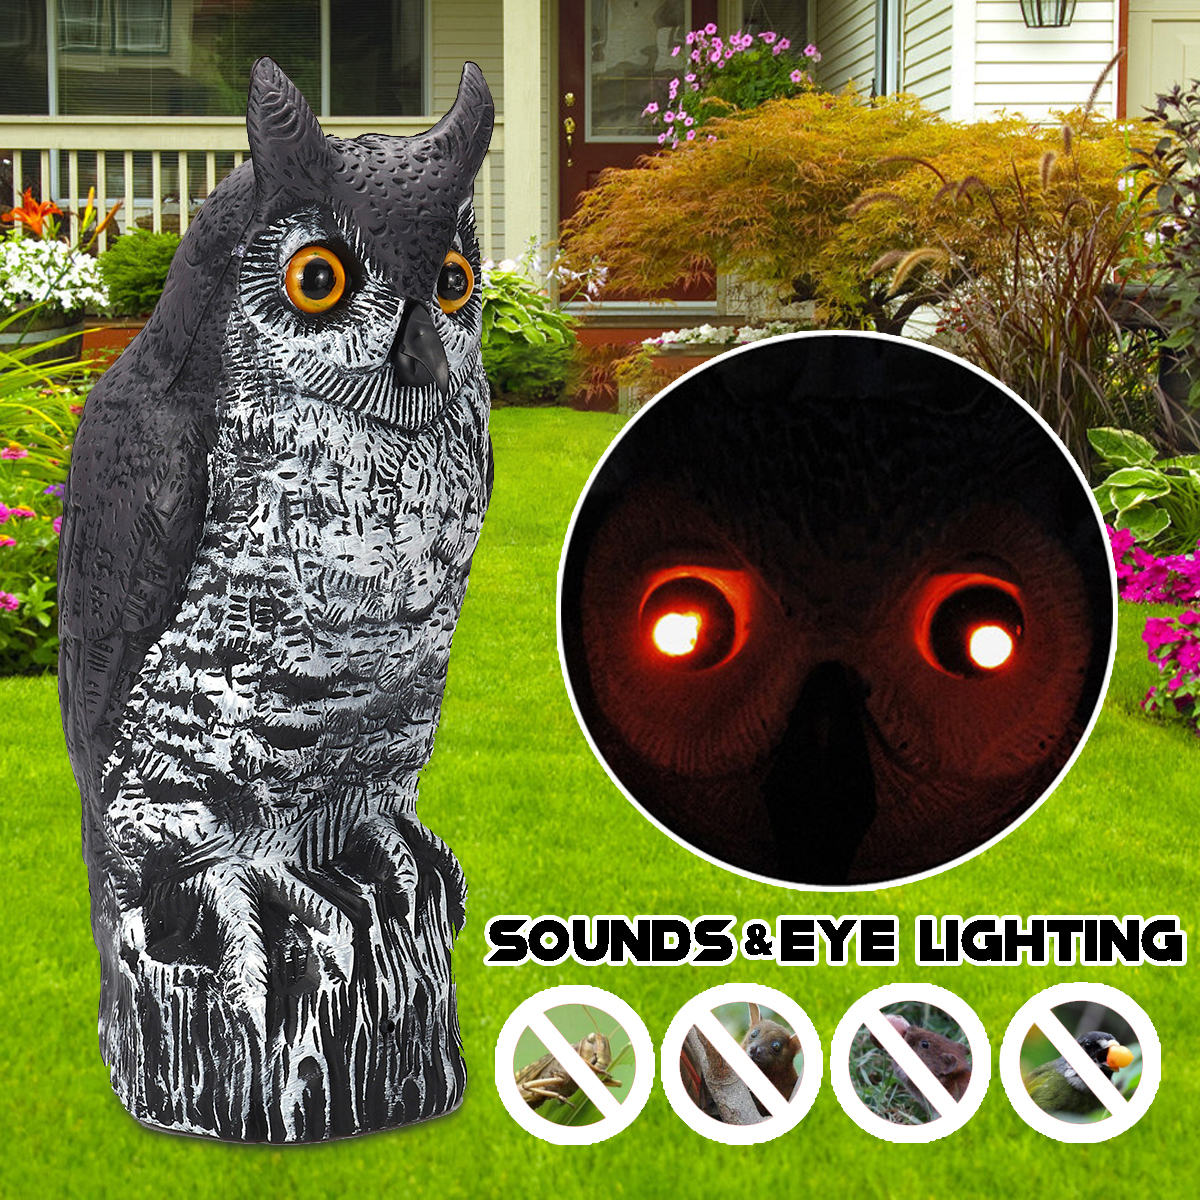 40cm-Electric-Induction-Sound-Illuminate-Hunting-Owl-Decoy-Garden-Decoration-1536372-1